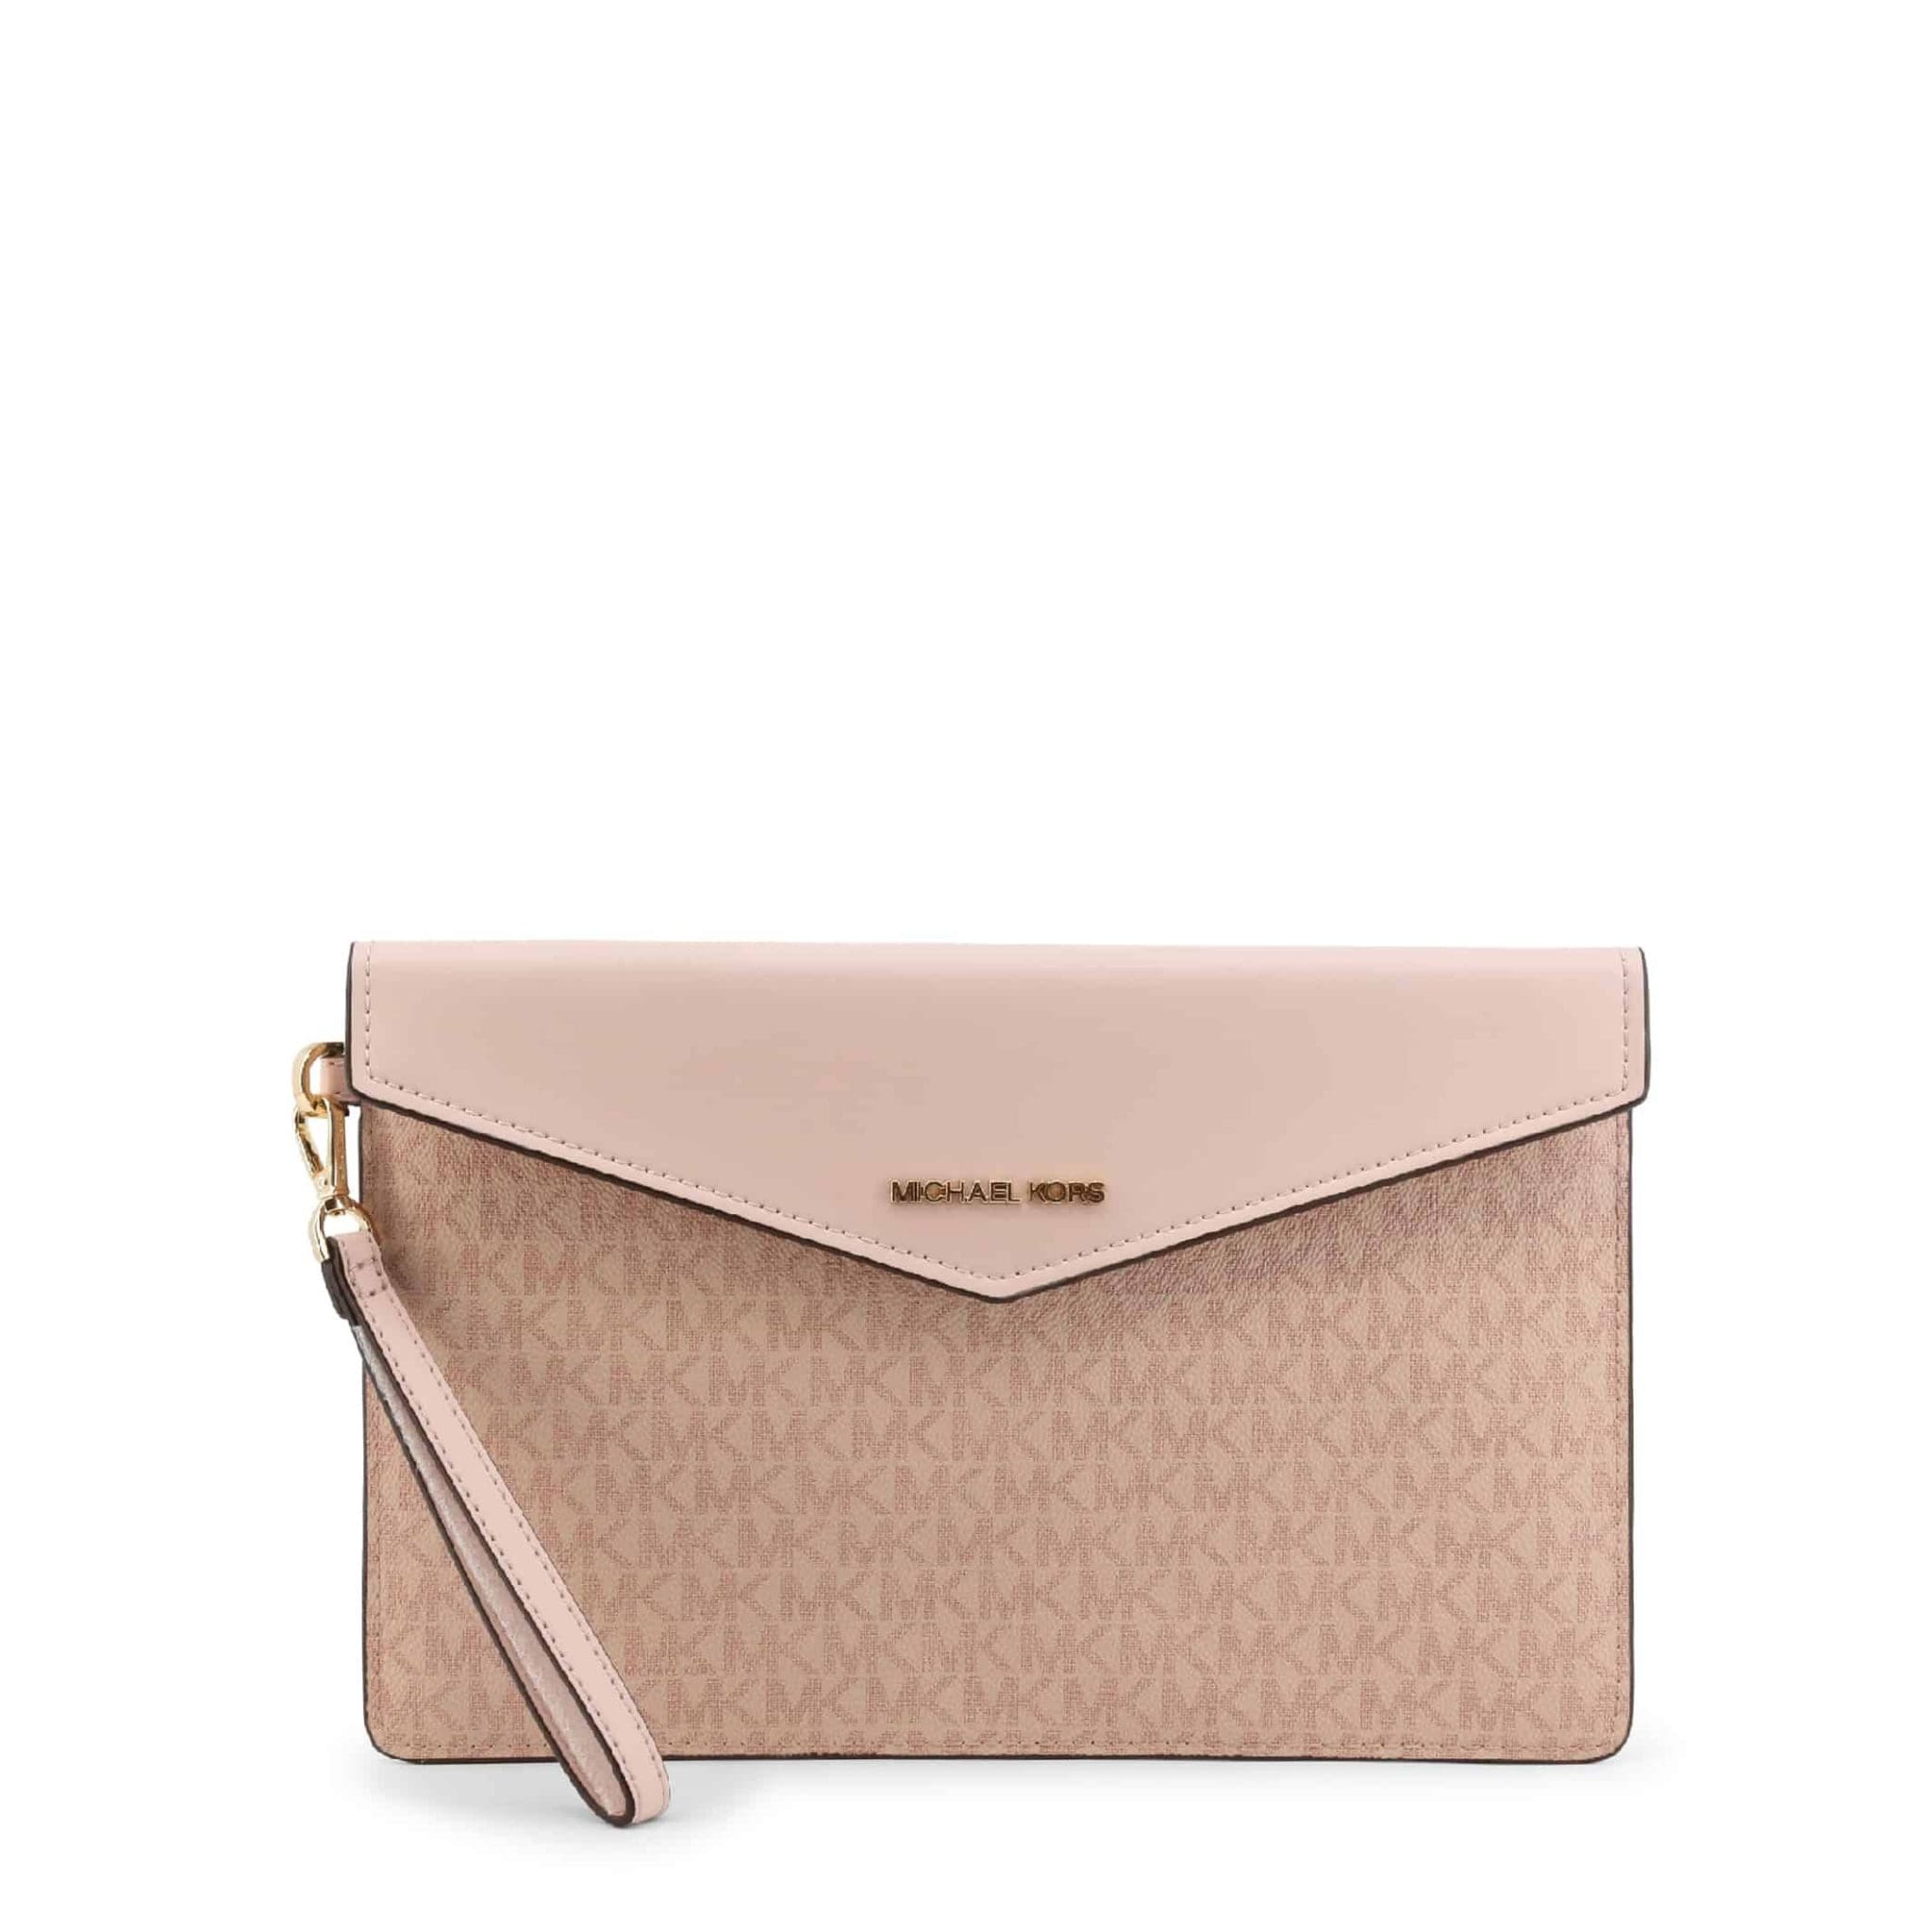 Michael Kors Pink Shopping Bag - Maisie_35T1G5Mt7T 3